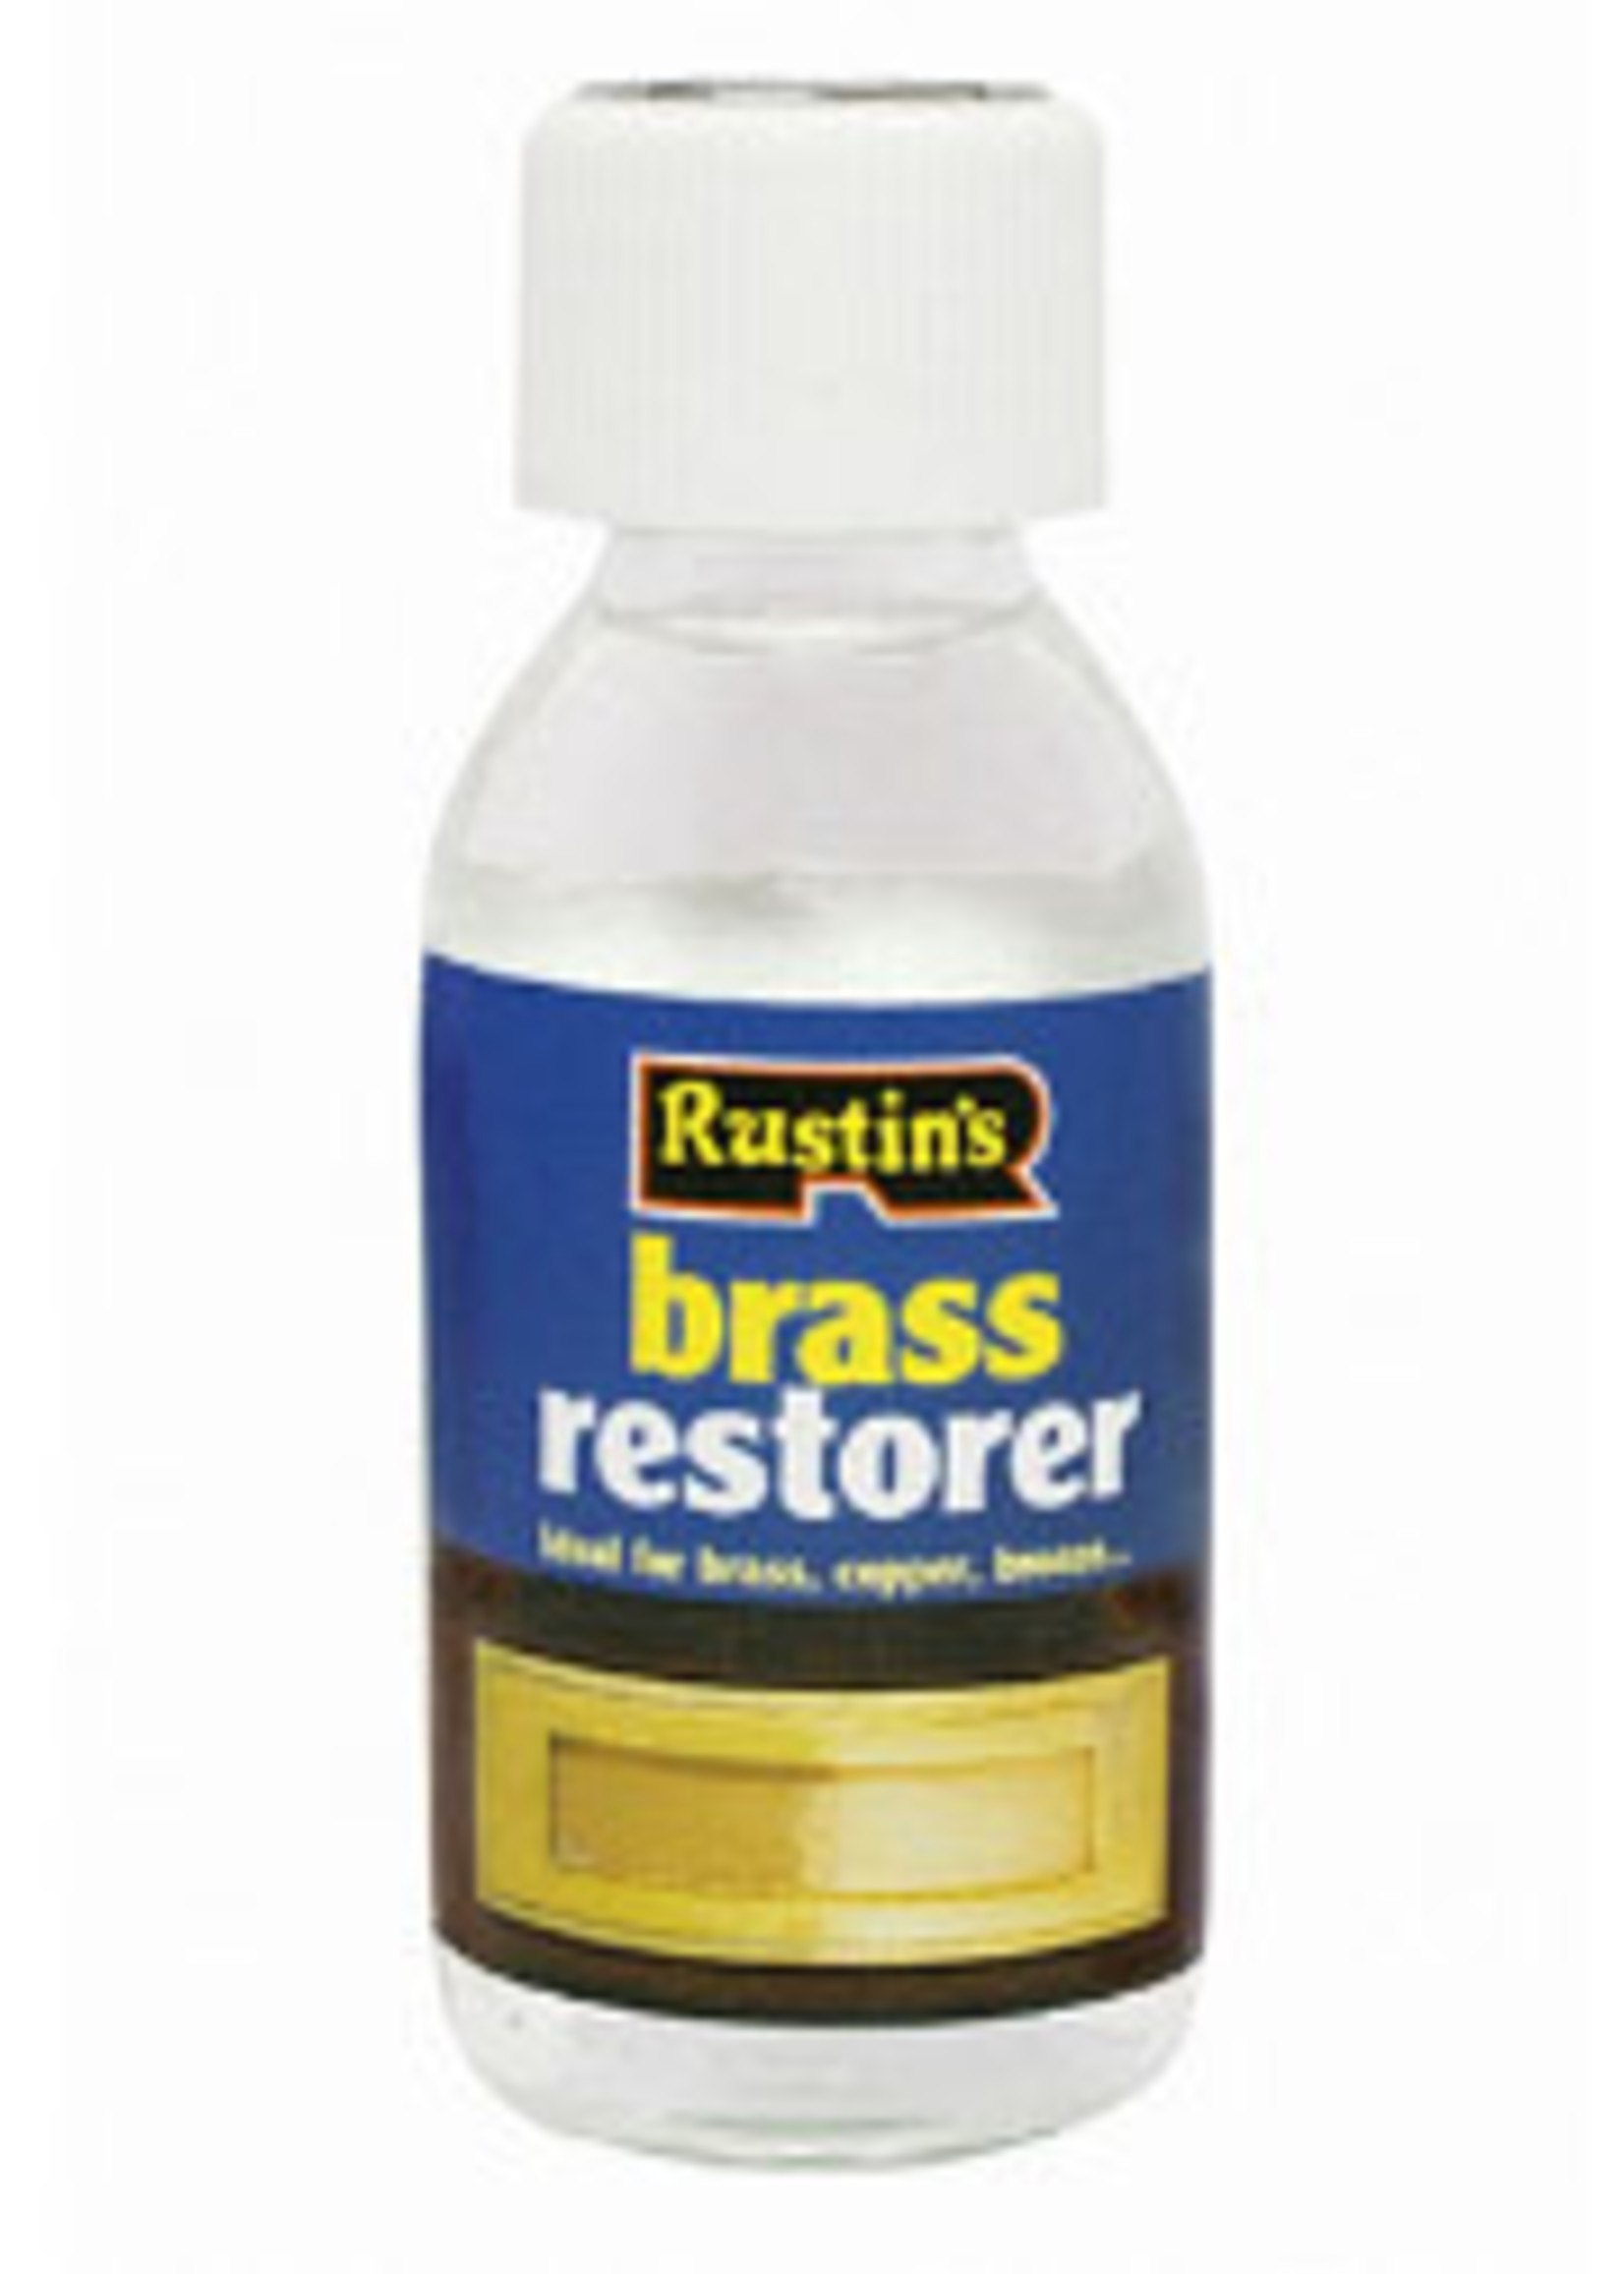 Rustins Rustins Brass restorer 125ml